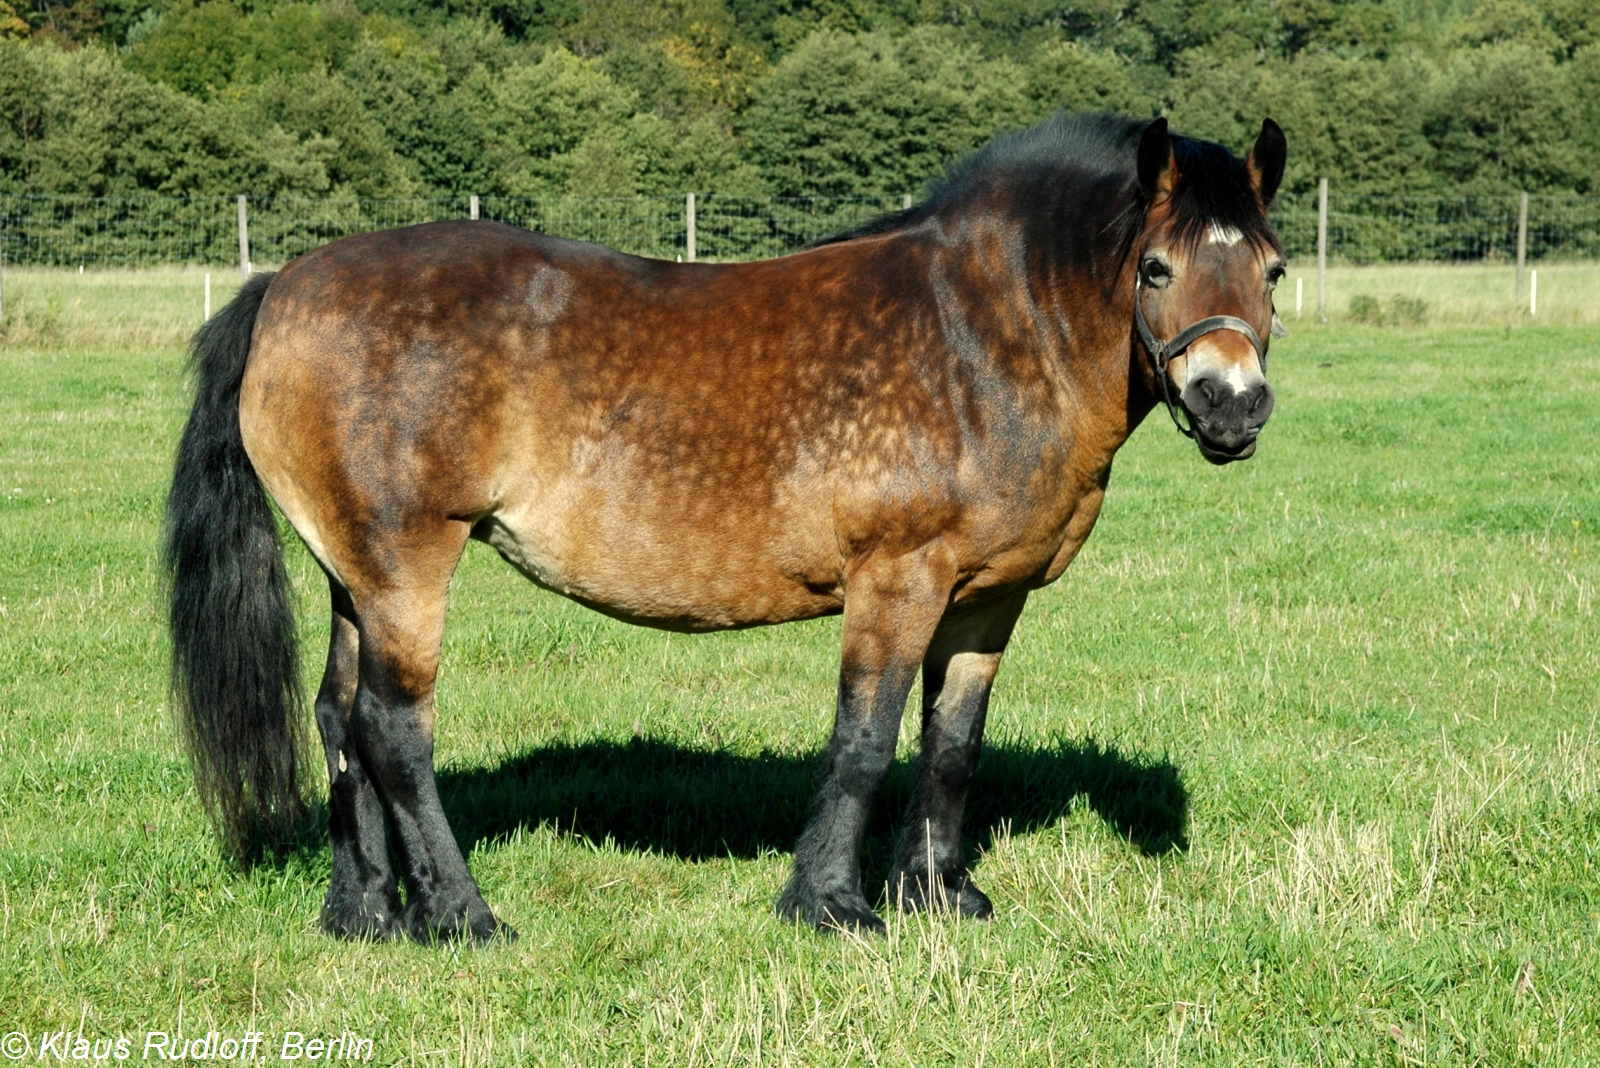 Gotland pony breed